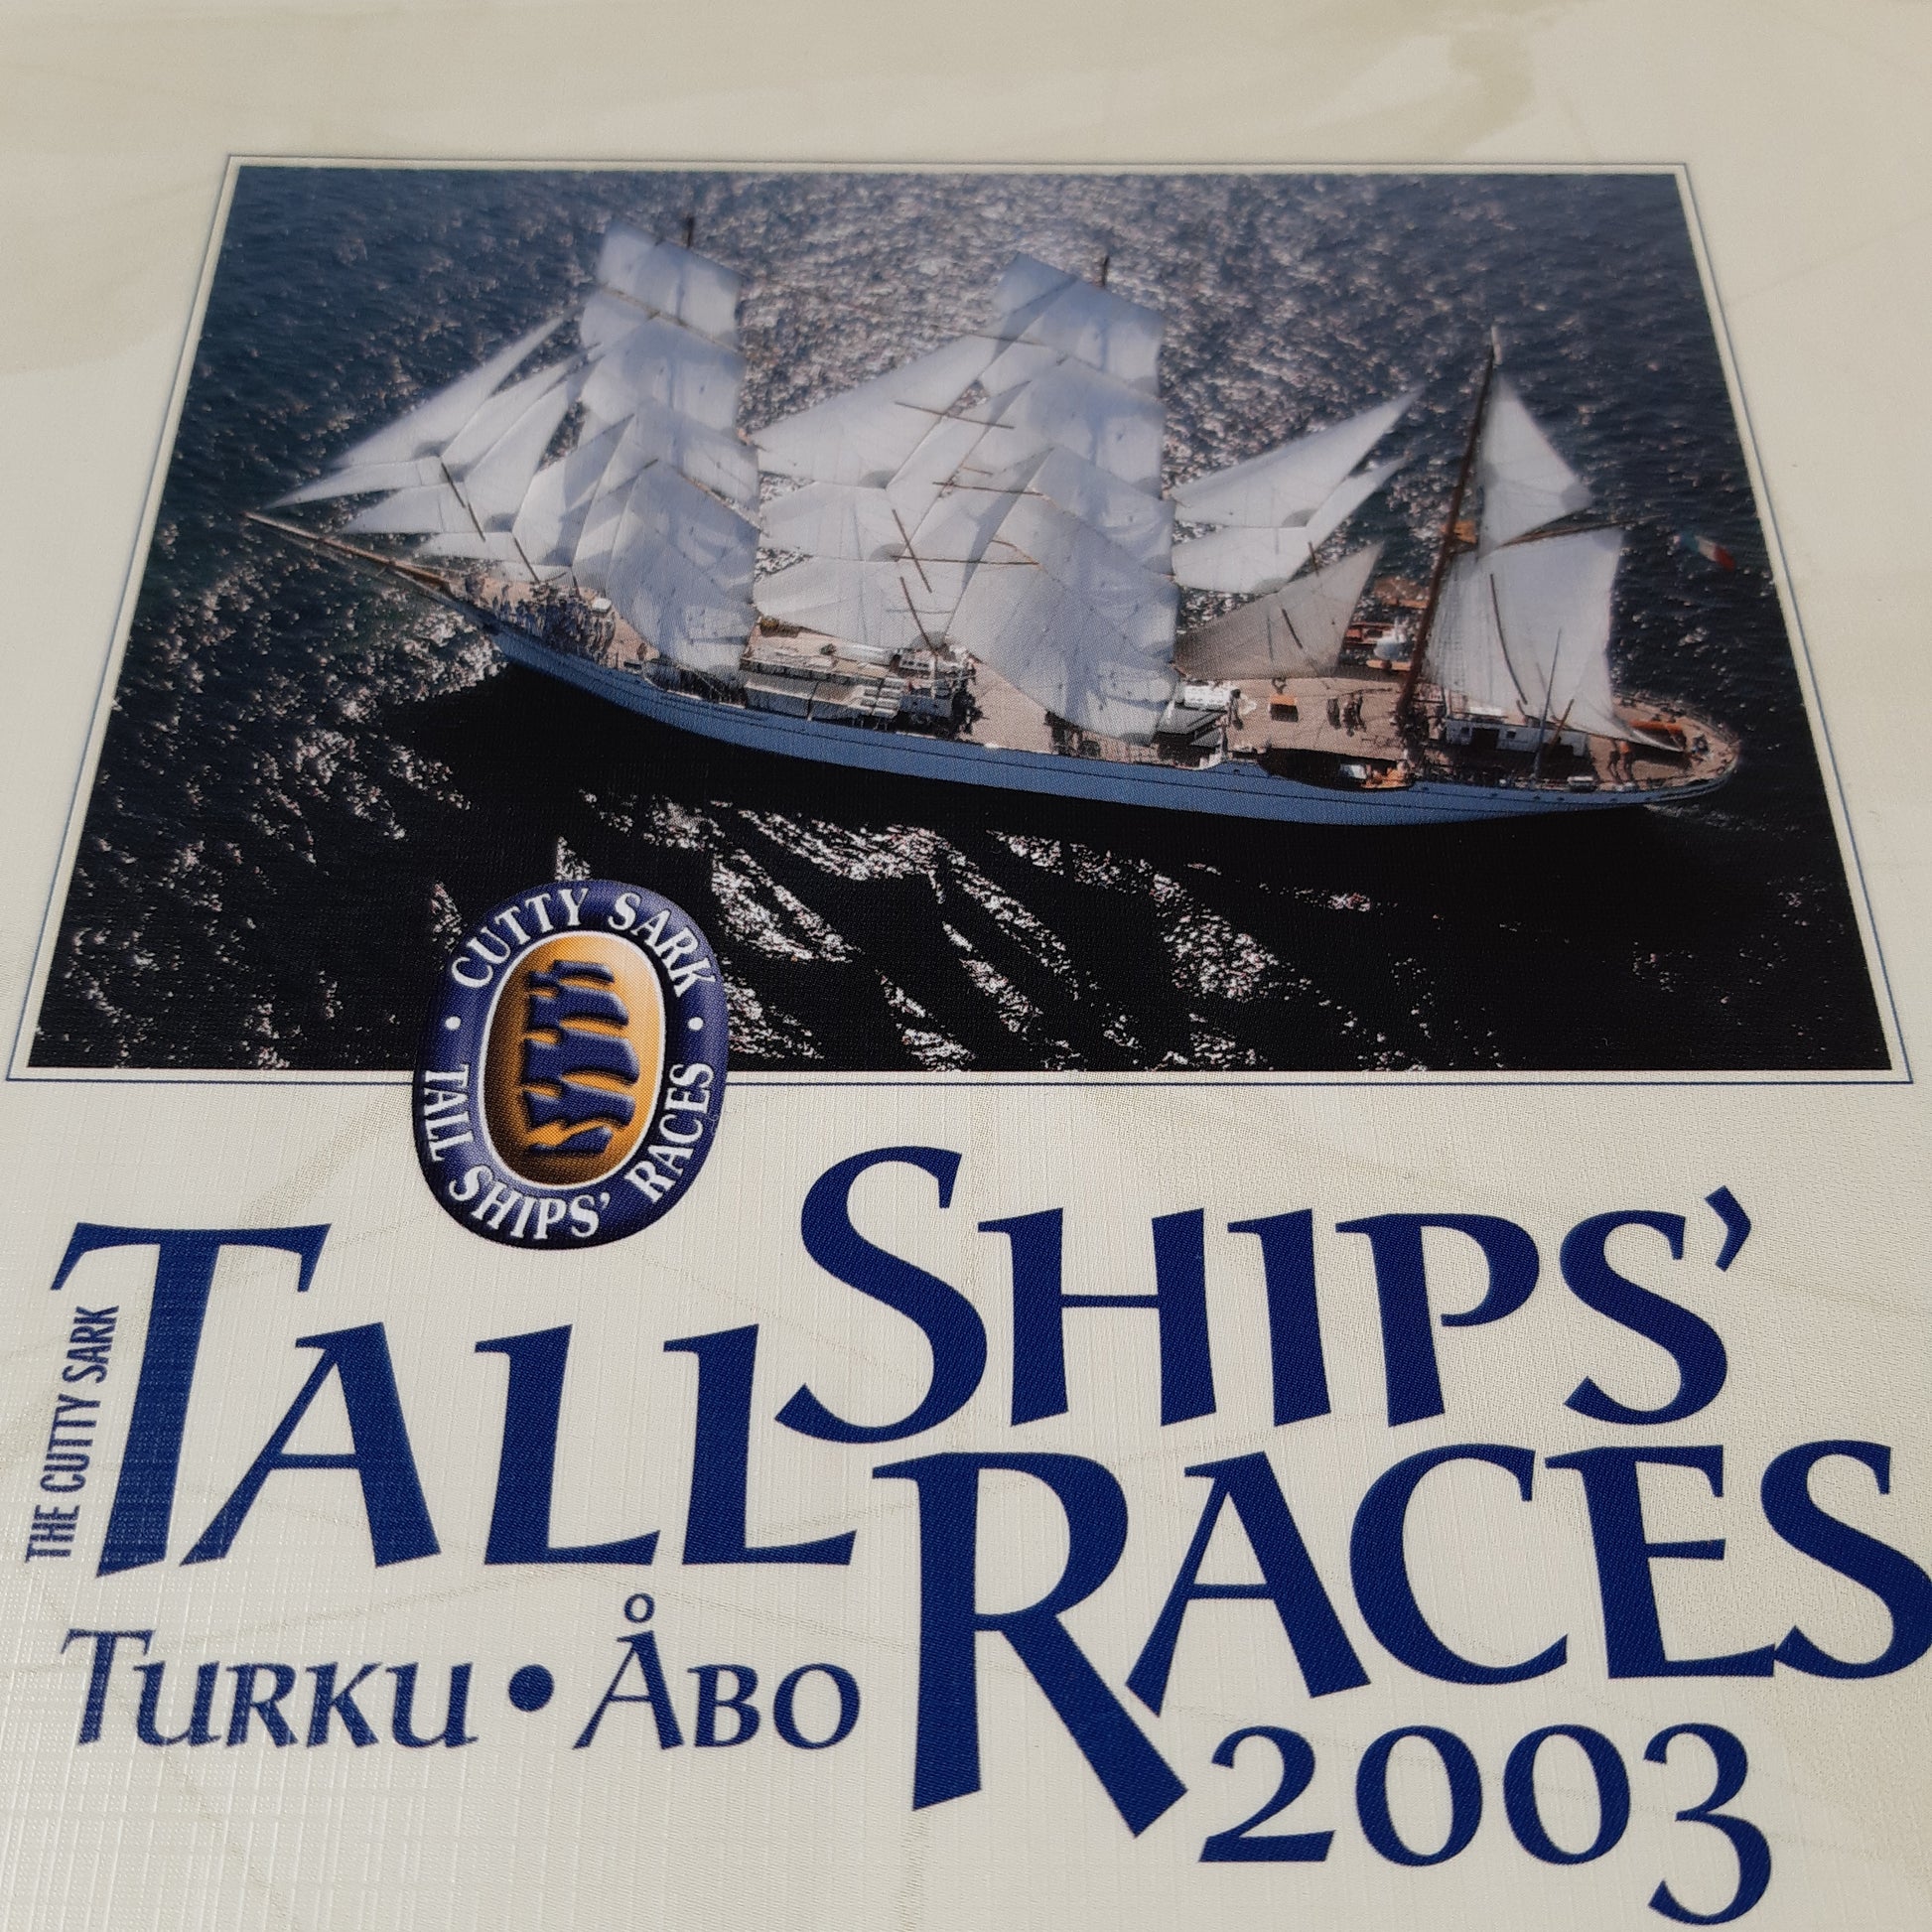 the cutty sark tall ships' races 2003 turku - åbo